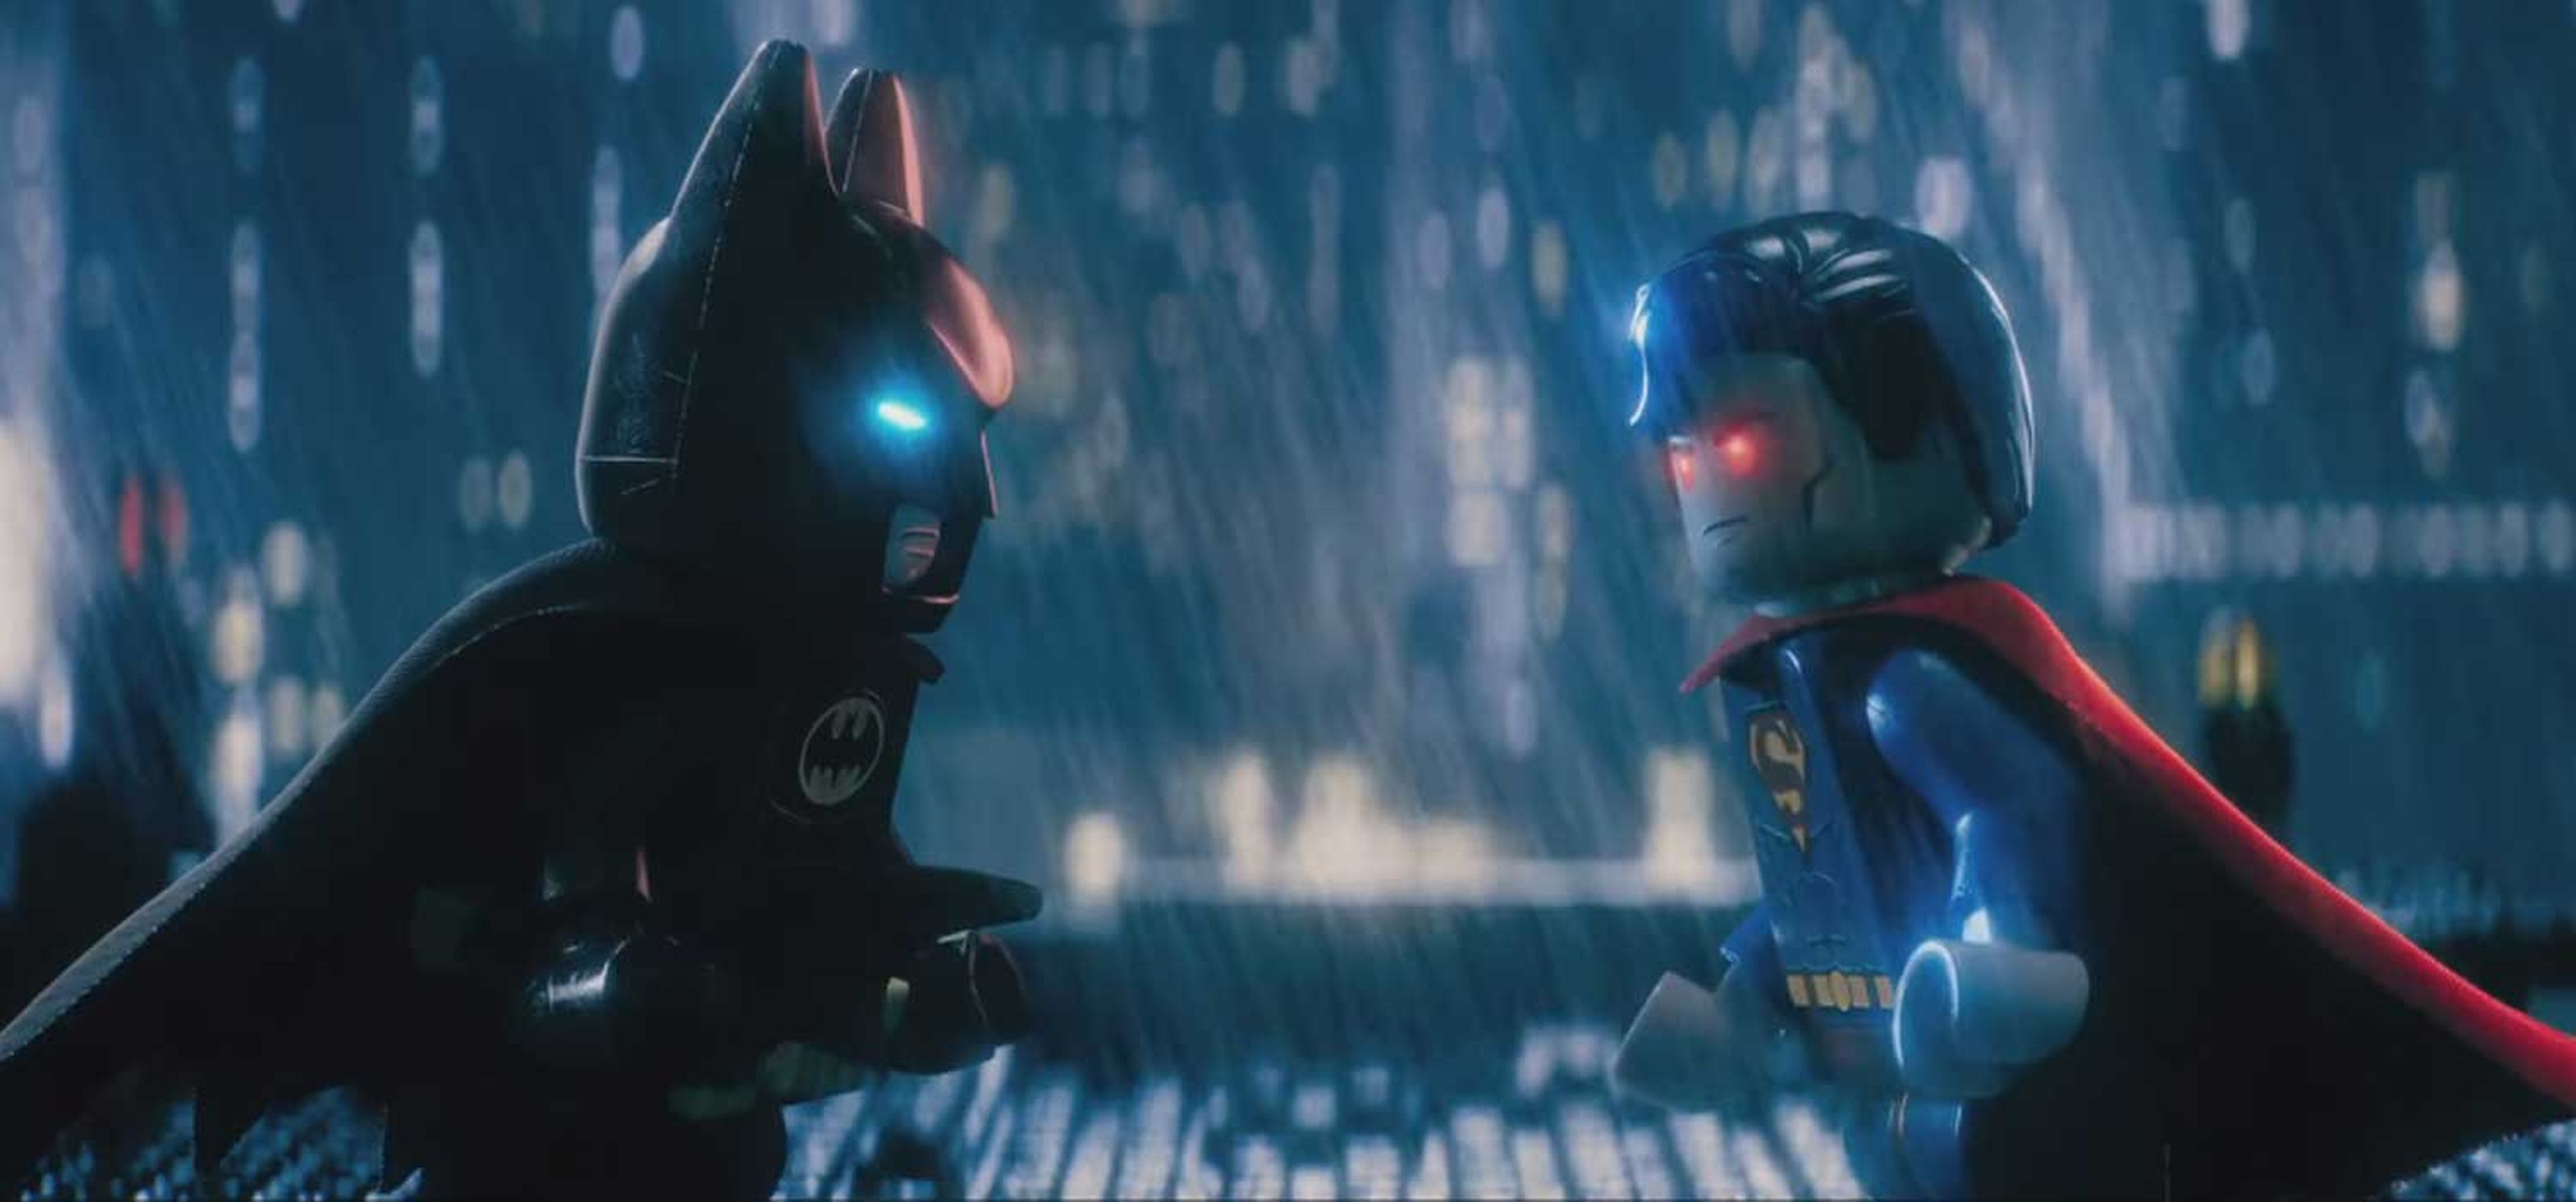 THE LEGO BATMAN MOVIE - Trailer 4